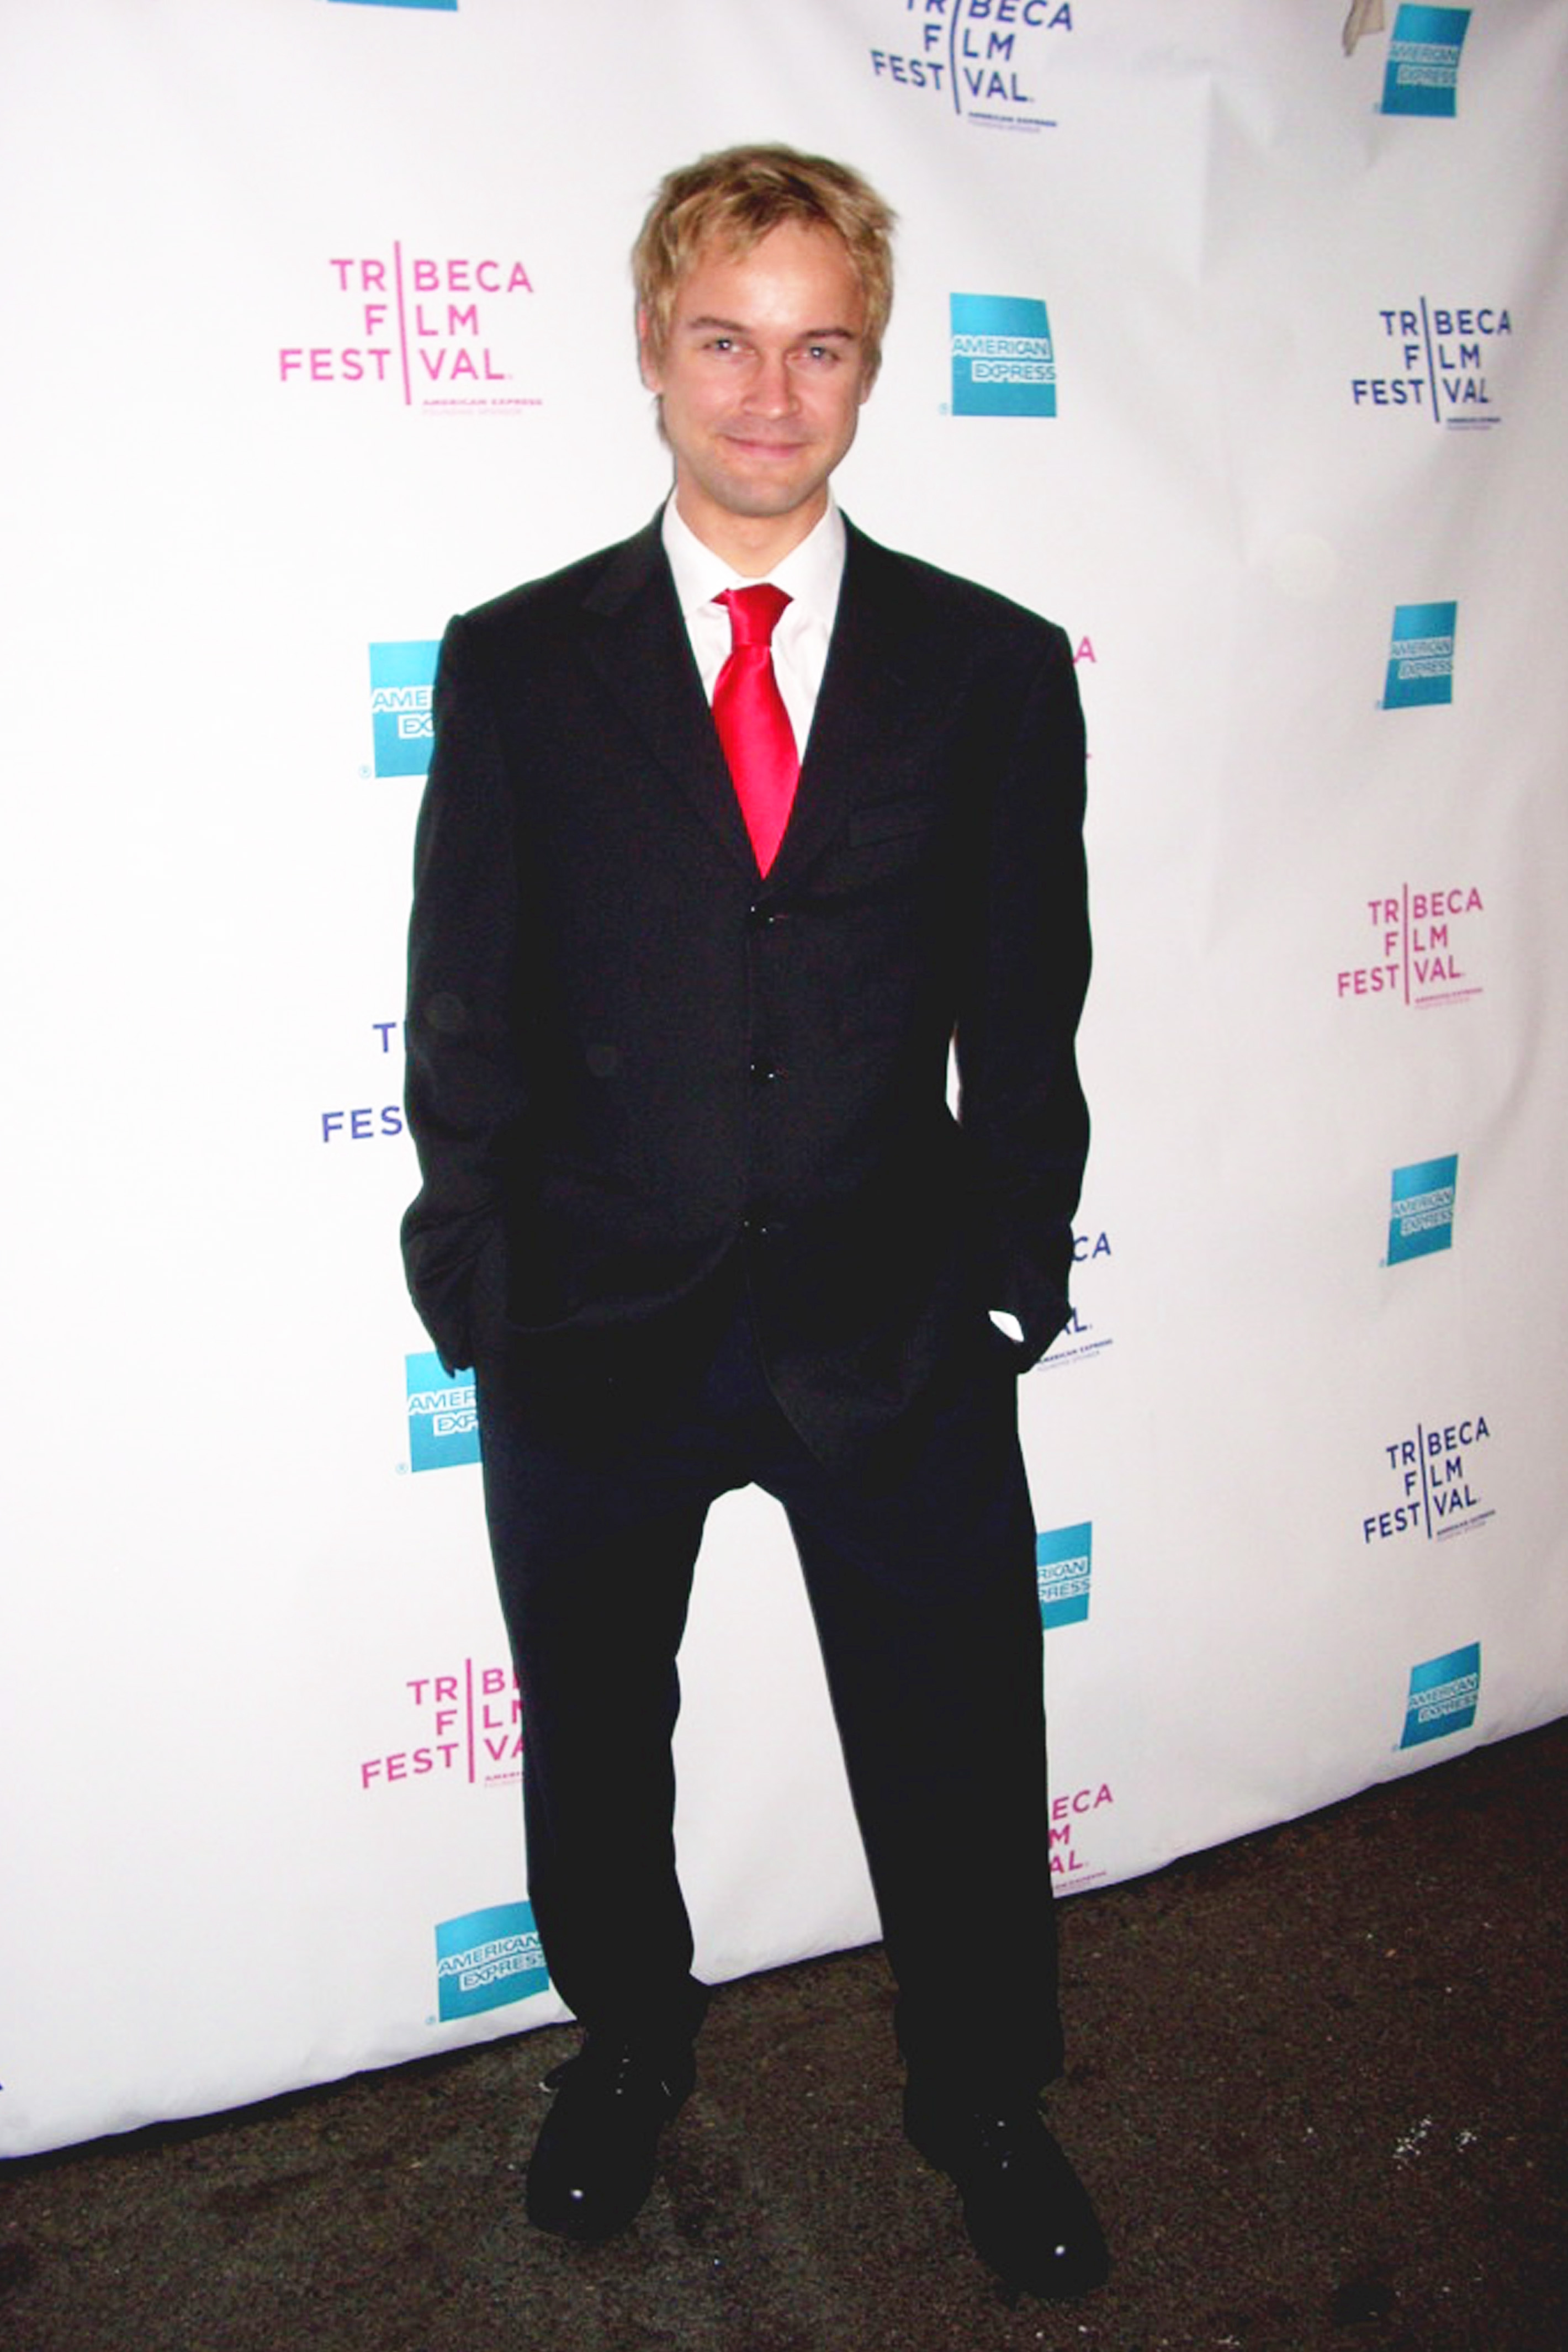 Andrew Lawton - Tribeca Film Festival, New York (2008)